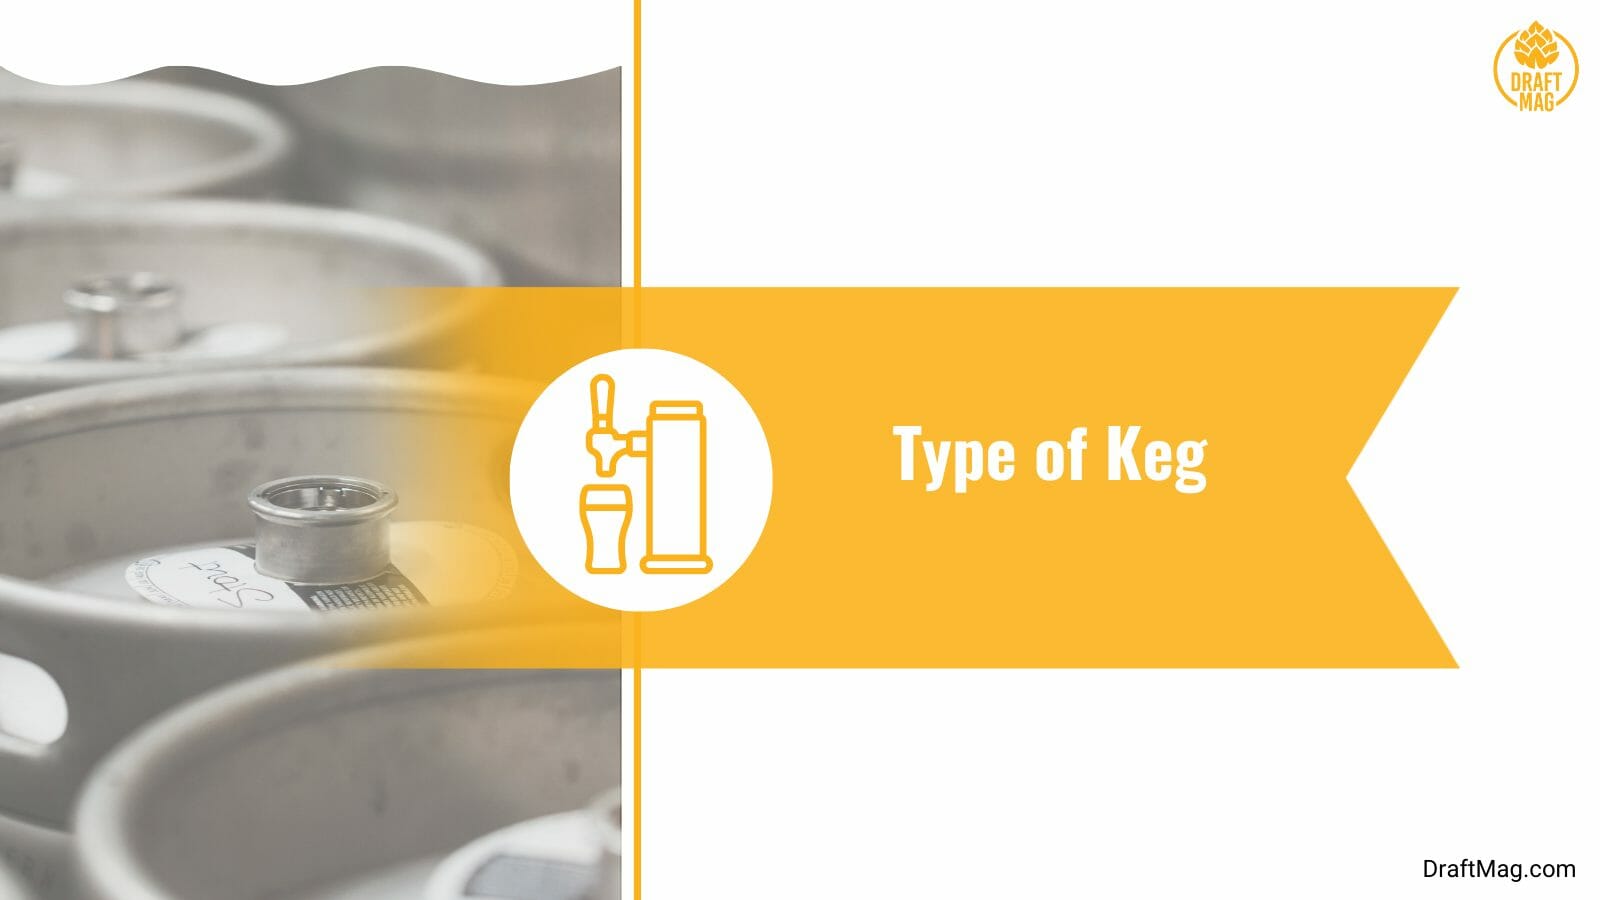 Checking the Type of Keg